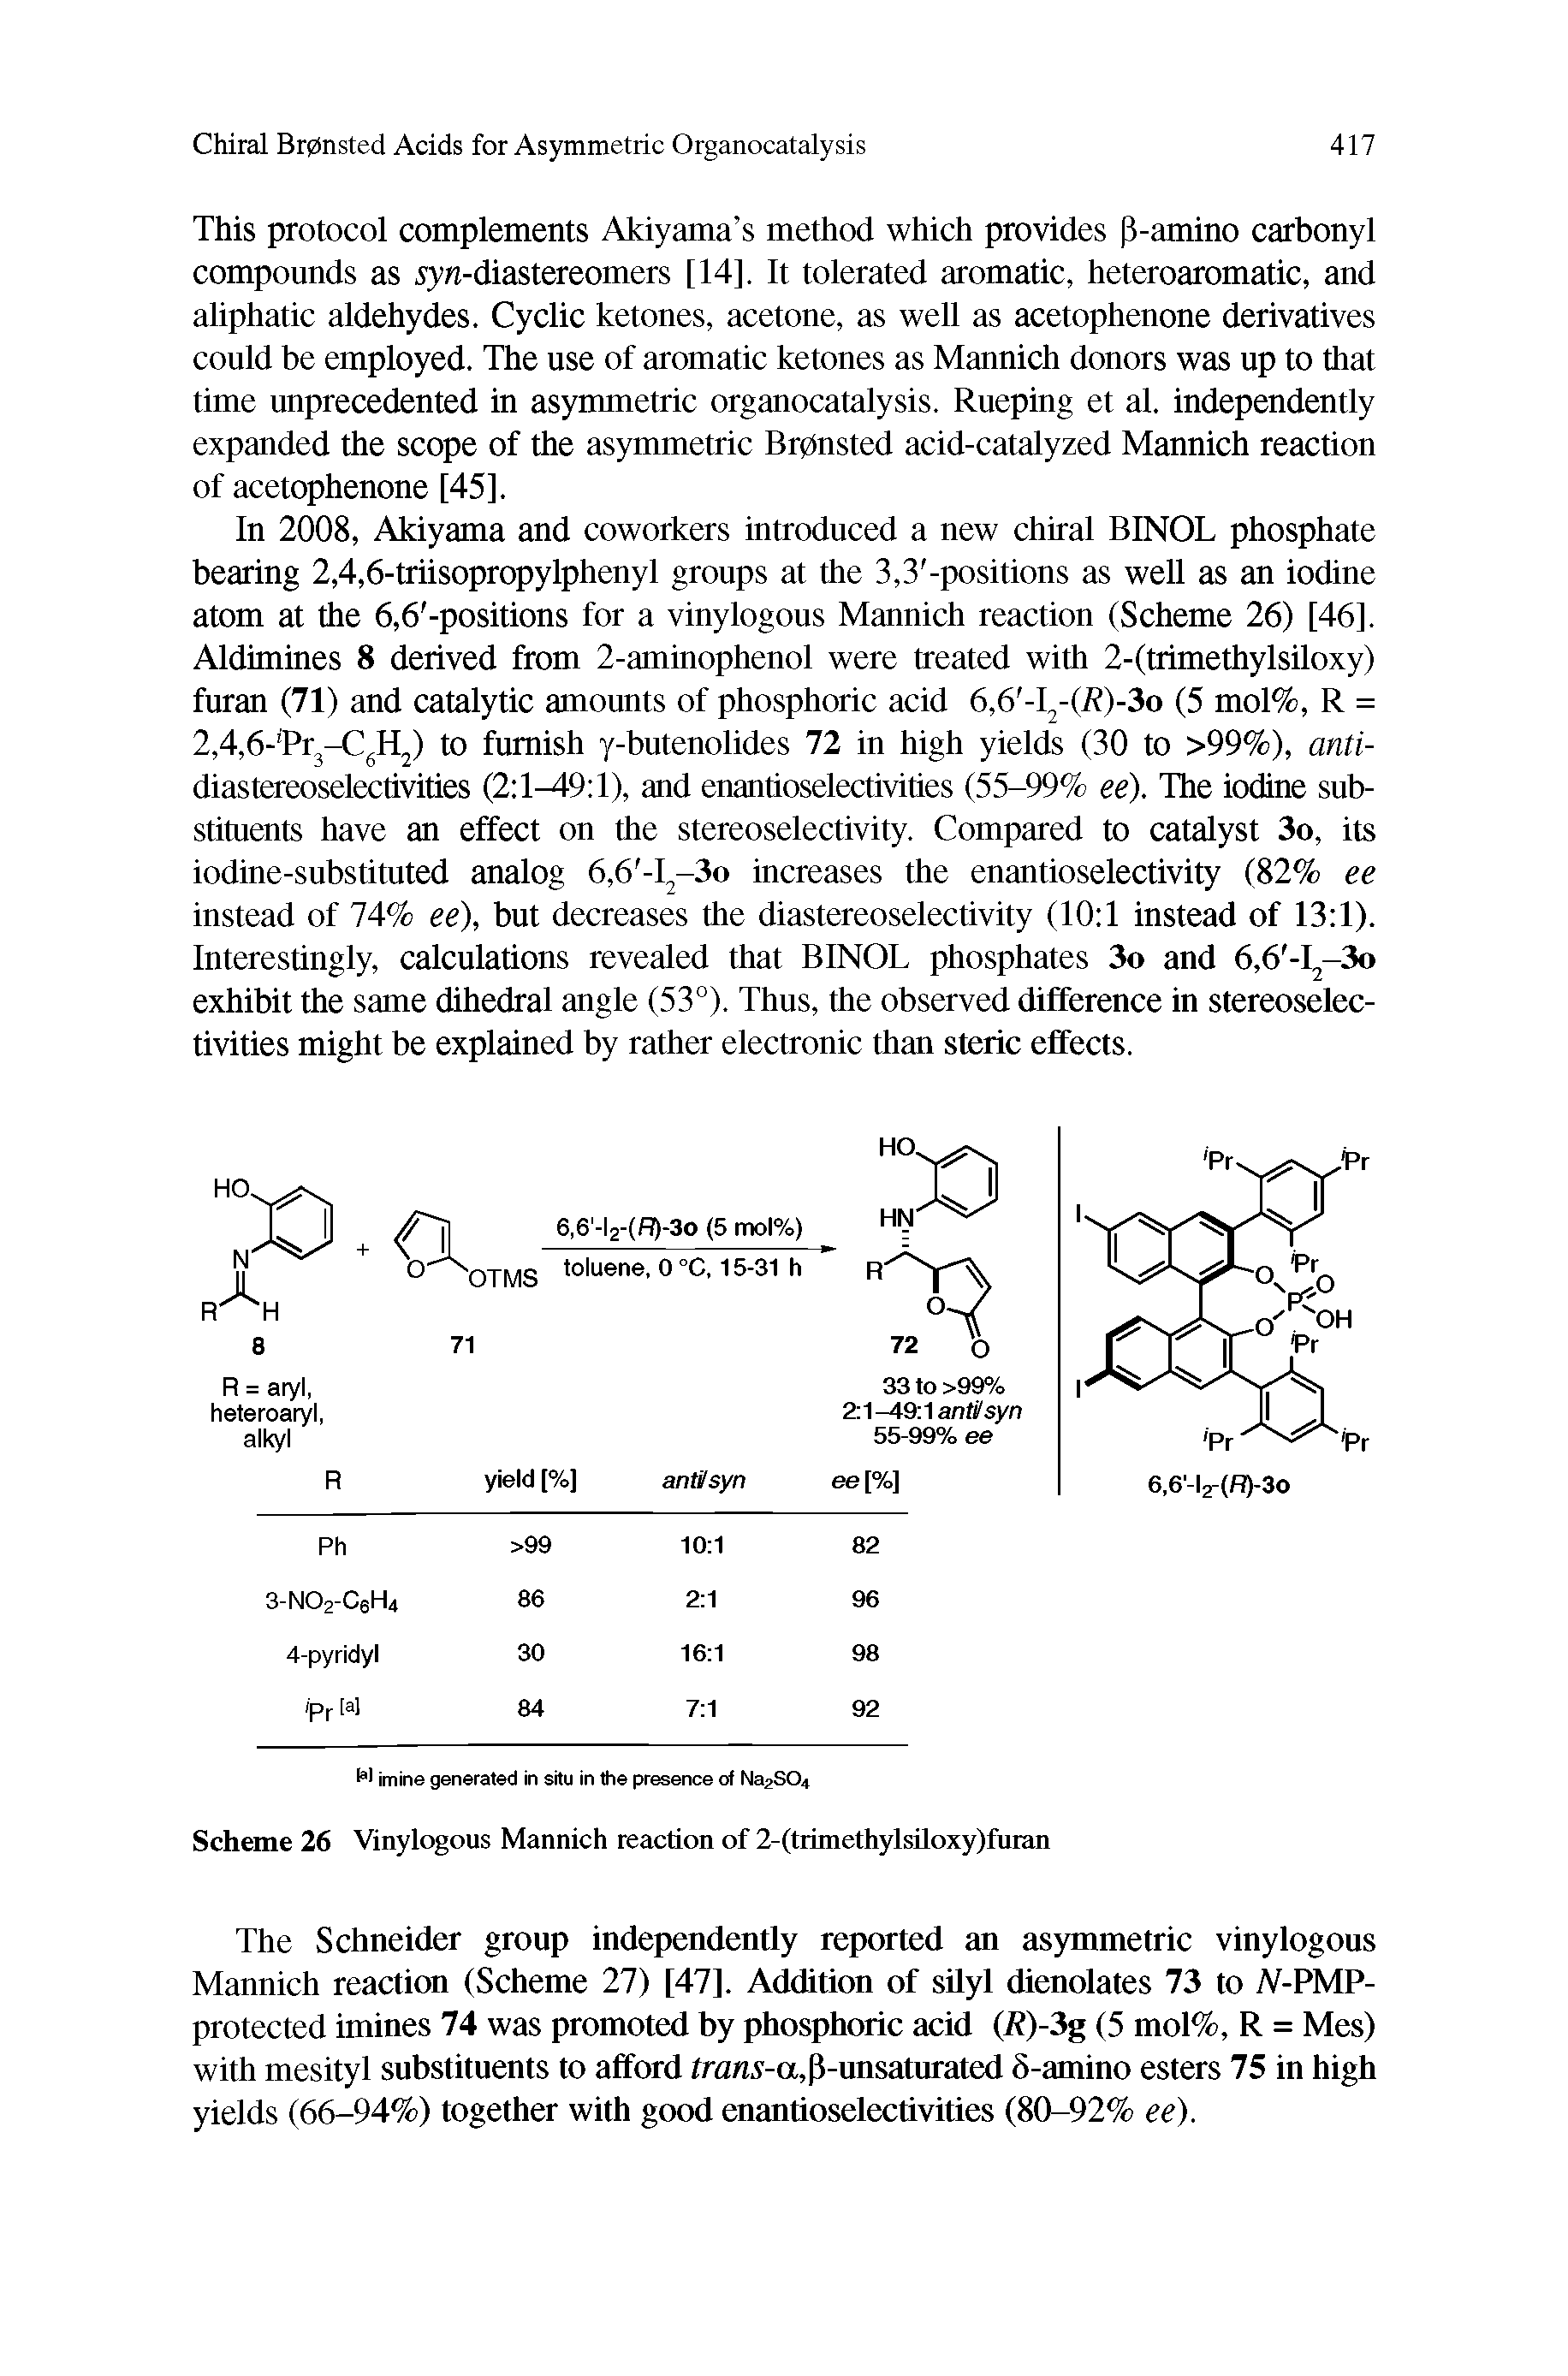 Scheme 26 Vinylogous Mannich reaction of 2-(trimethylsiloxy)furan...